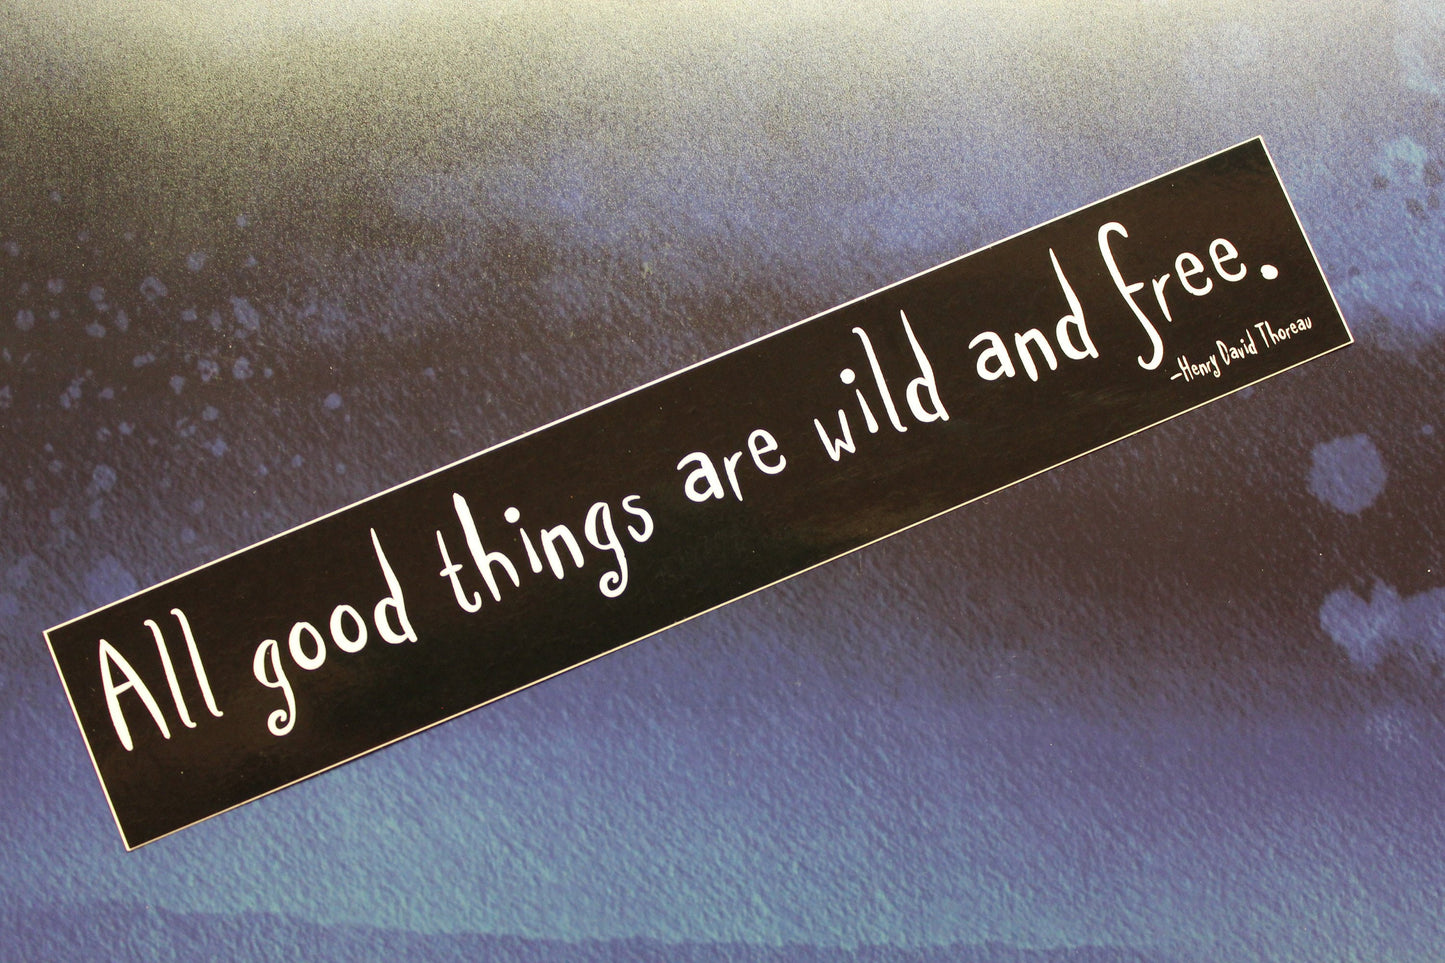 All Good Things Are Wild And Free... Thoreau vinyl sticker bumper car laptop bike guitar